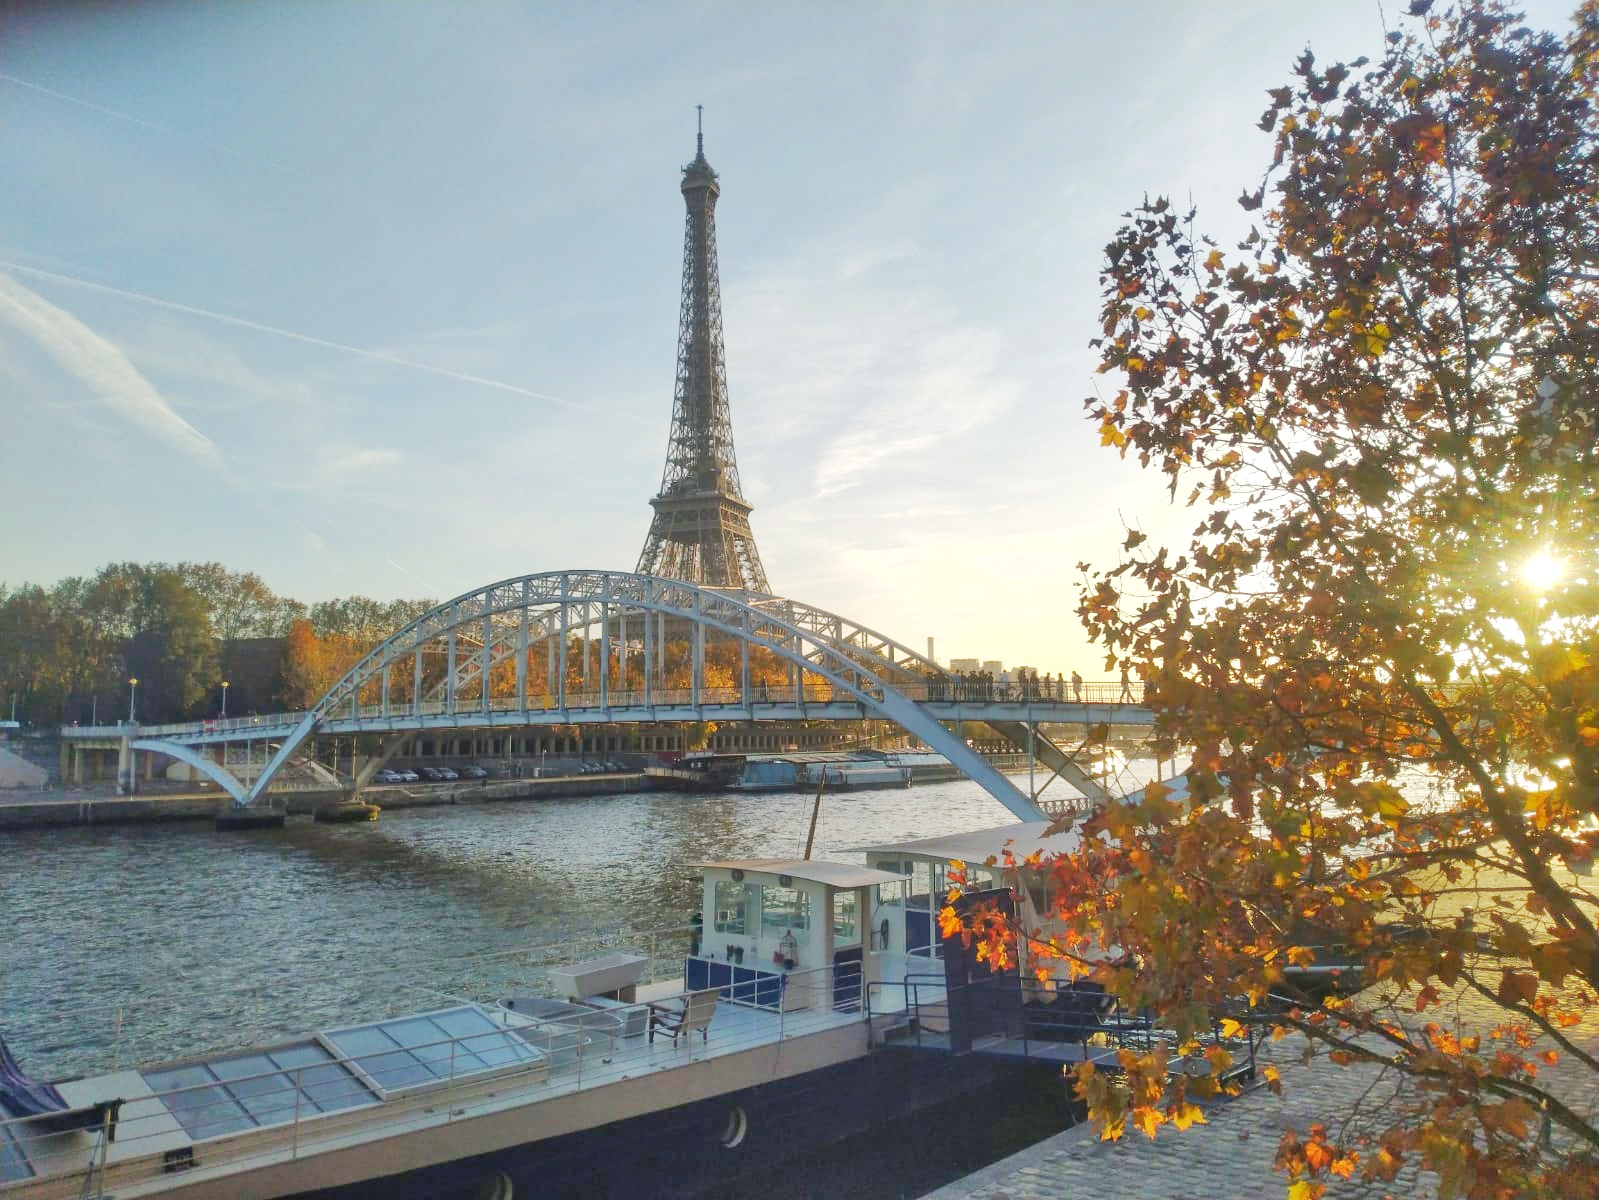 Paris Olympics 2024: Inaugural ceremony on the Seine